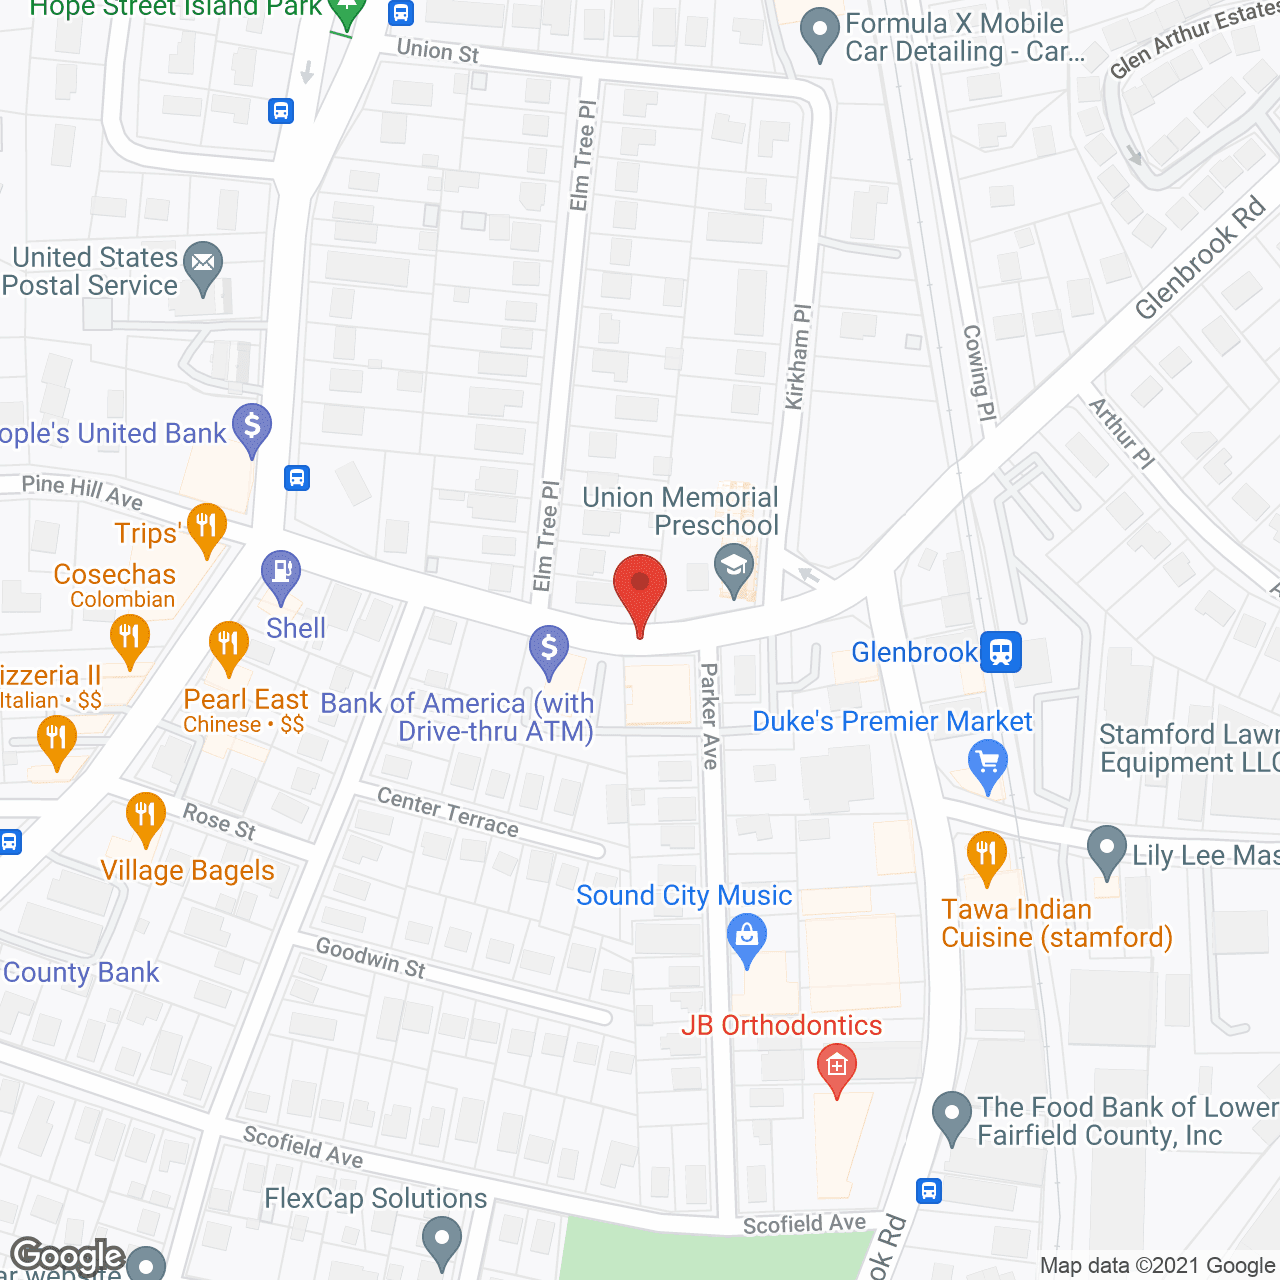 BrightStar Care - Stamford, CT in google map